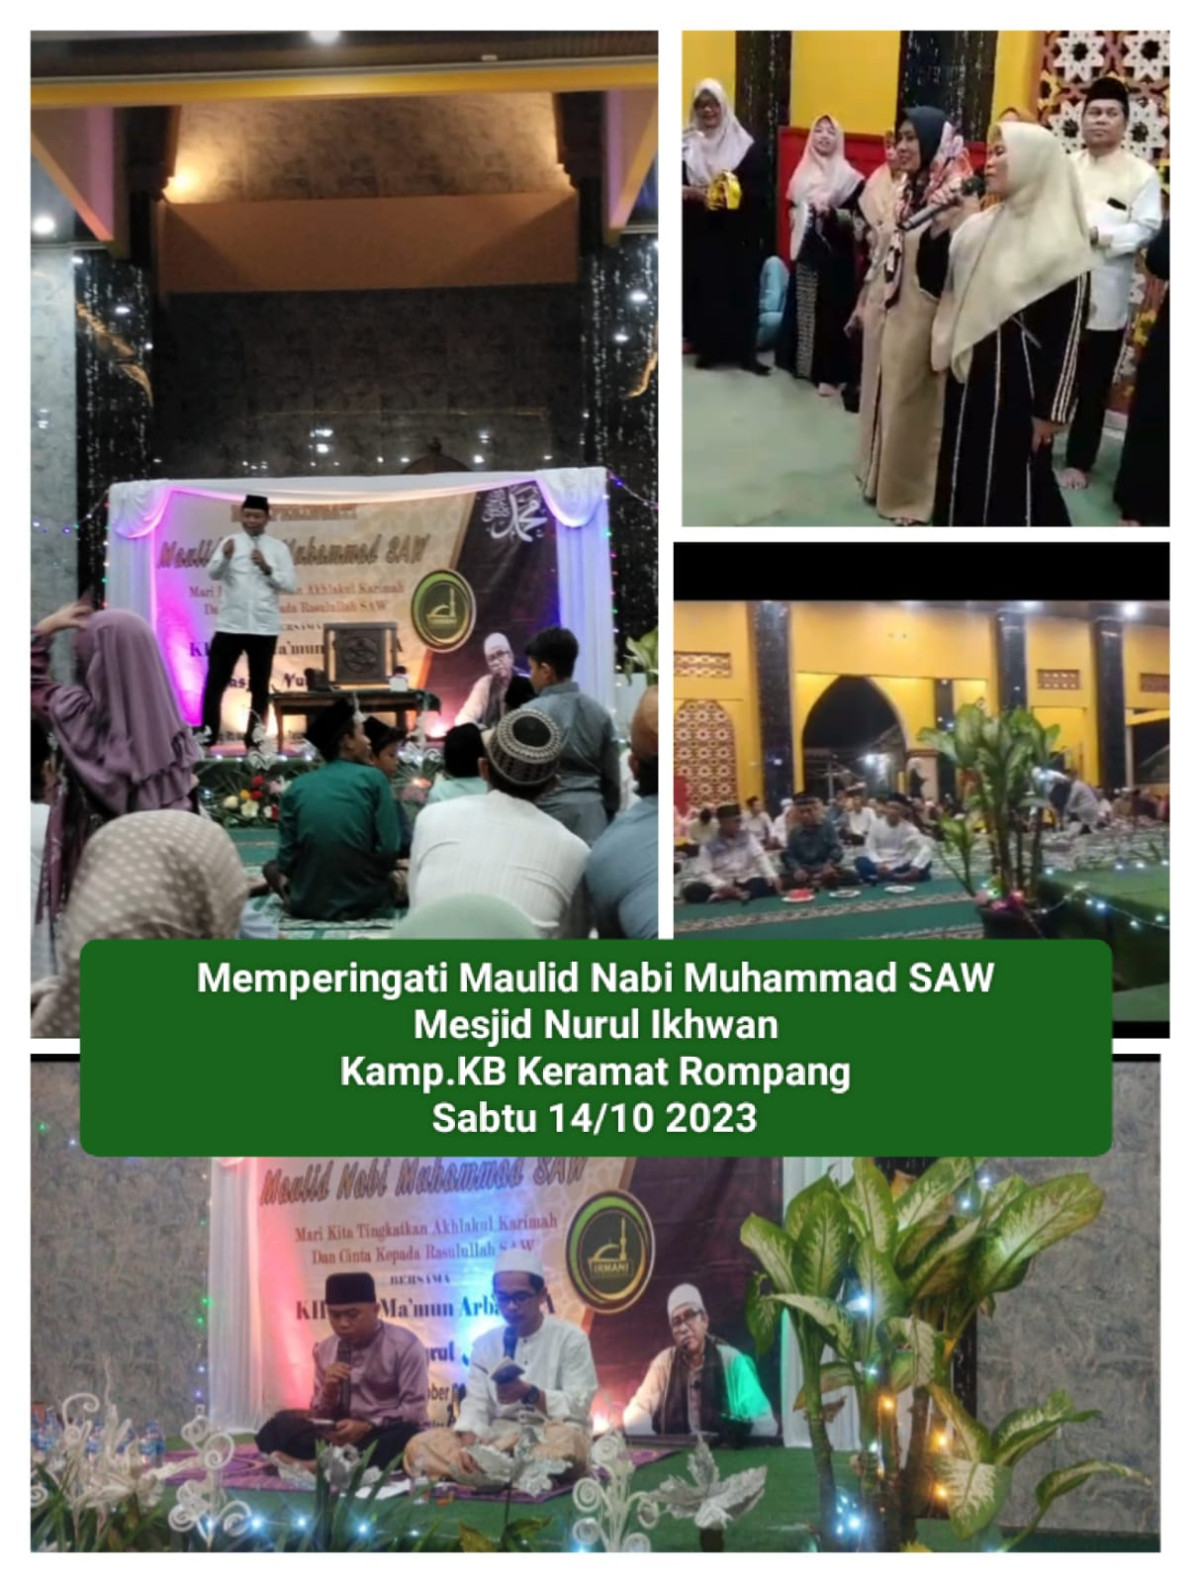 Peringatan maulid nabi Muhamad Saw di masjid Nurul ikhwan.